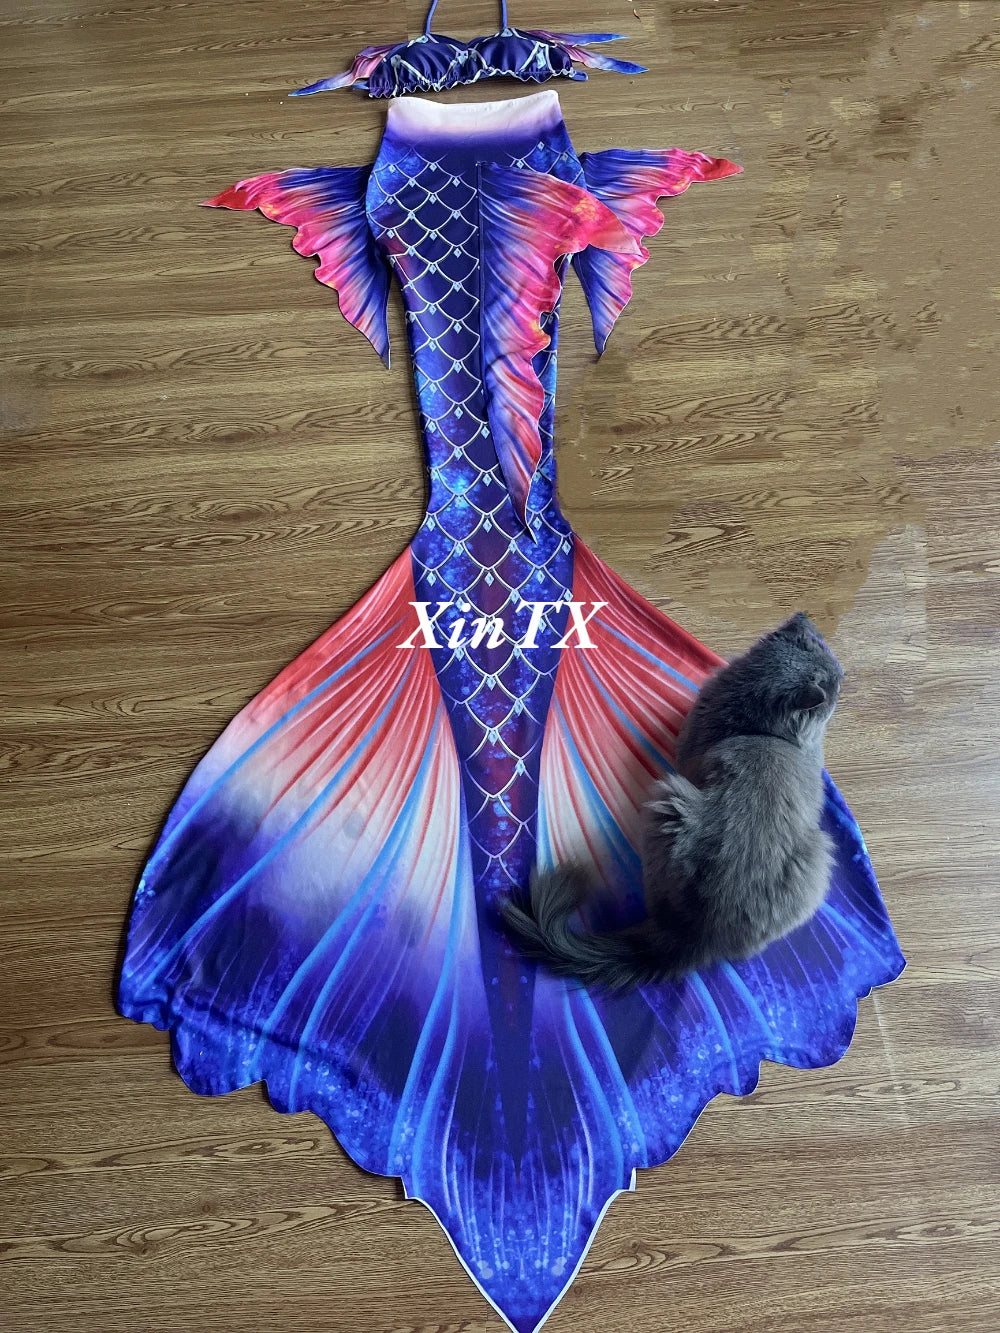 Bikini Woman Mermaid Tail Adult Swimsuit Monofin For Beach Diving Model Photoshoot